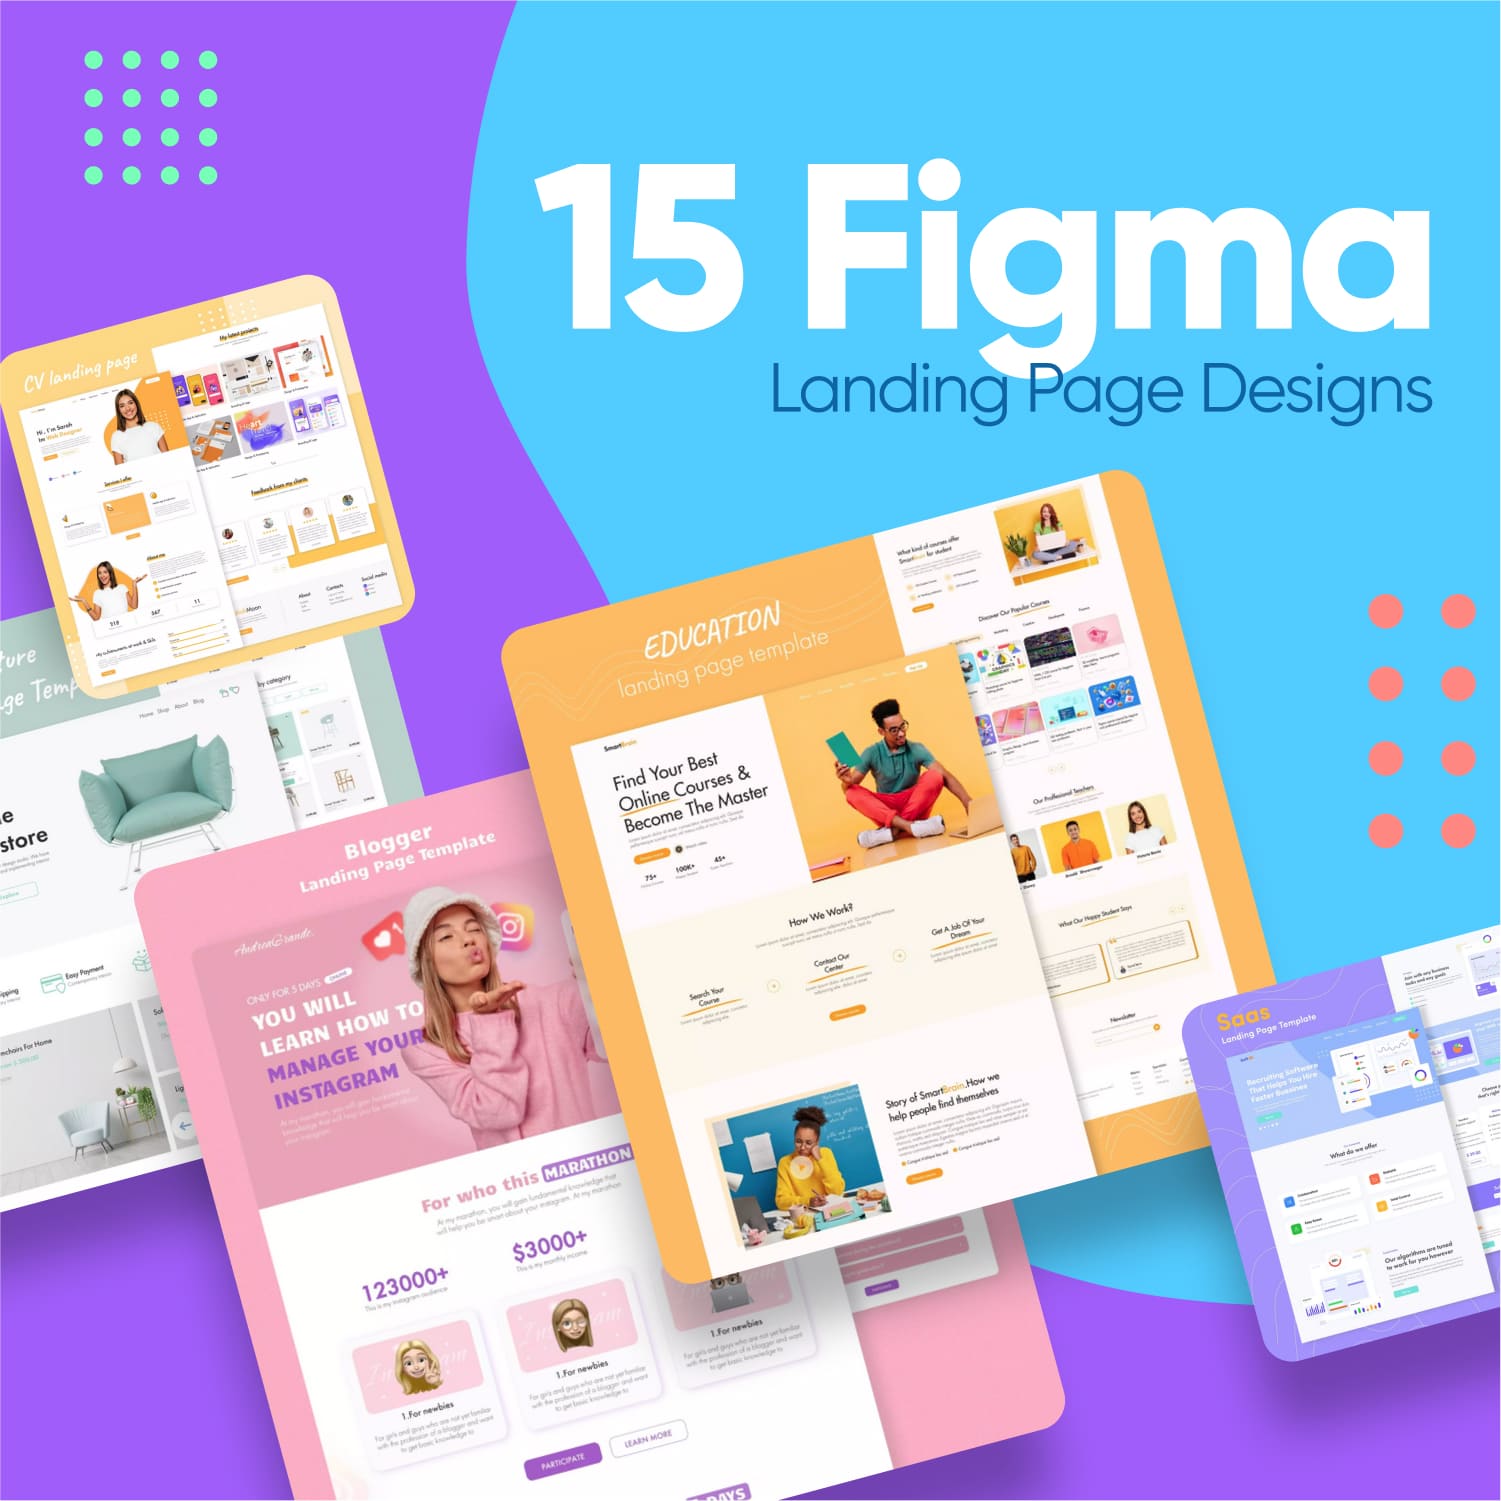 15 Figma Landing Page Designs 1500 1.